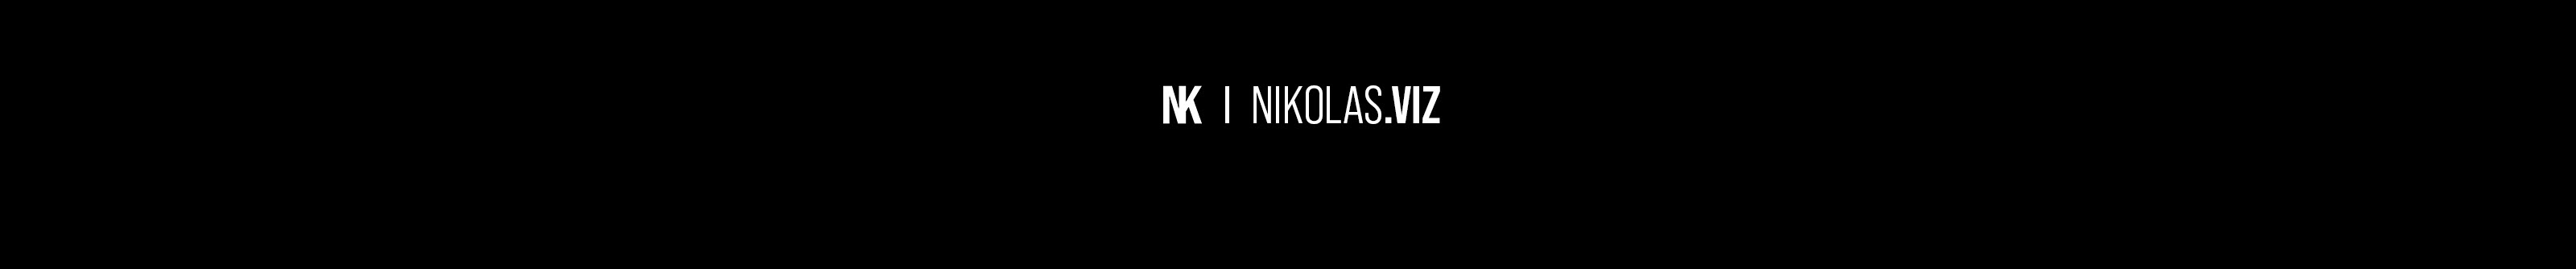 Nikolas Keuschnig's profile banner